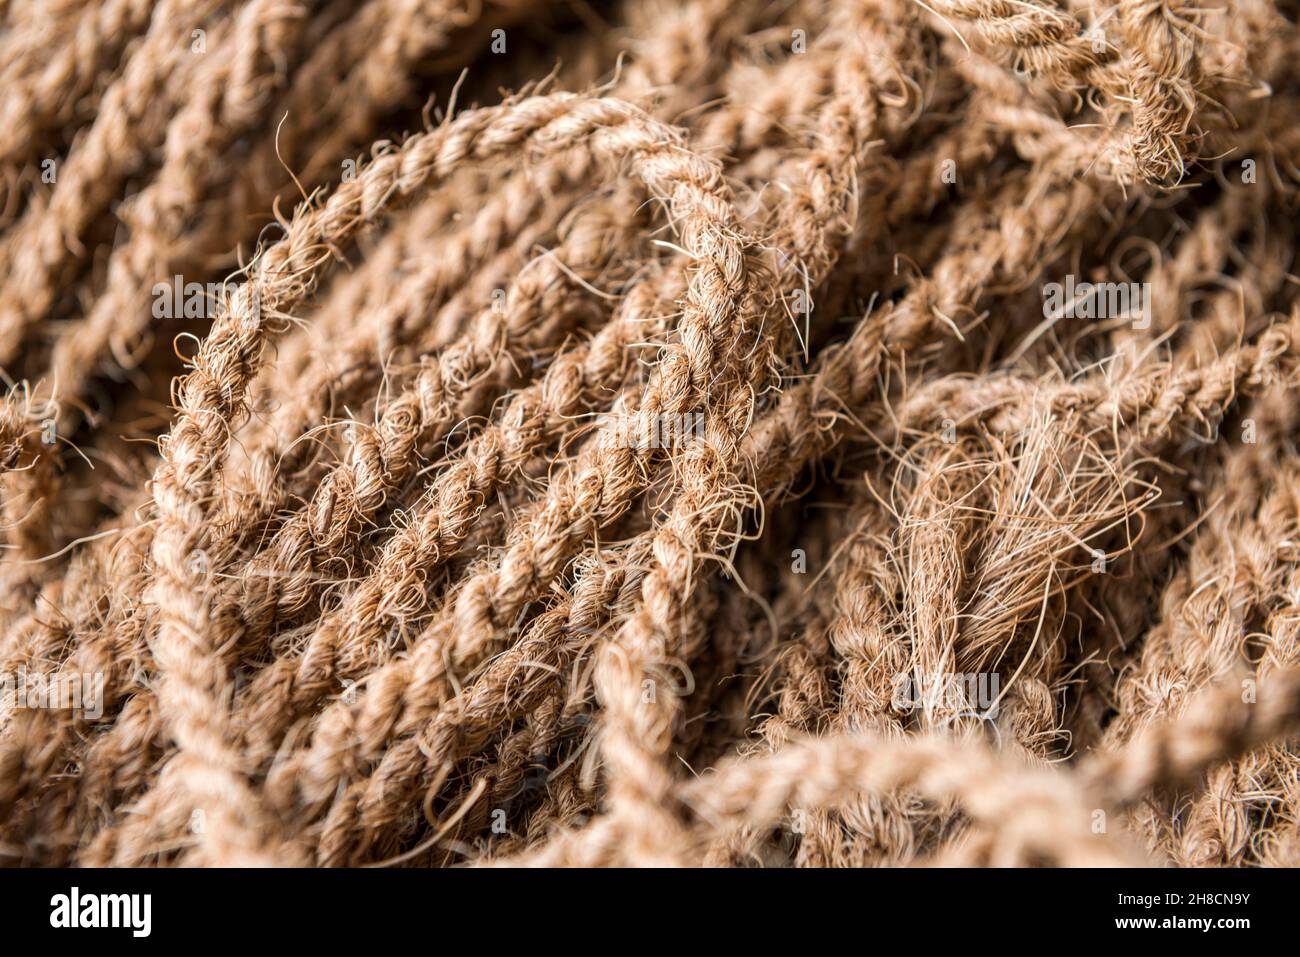 Sri Lanka, la province d'Uva, Uva Province, the Uva Province, corde en fibre de coco, Kokosfaser Seil, coconut fiber rope Stock Photo